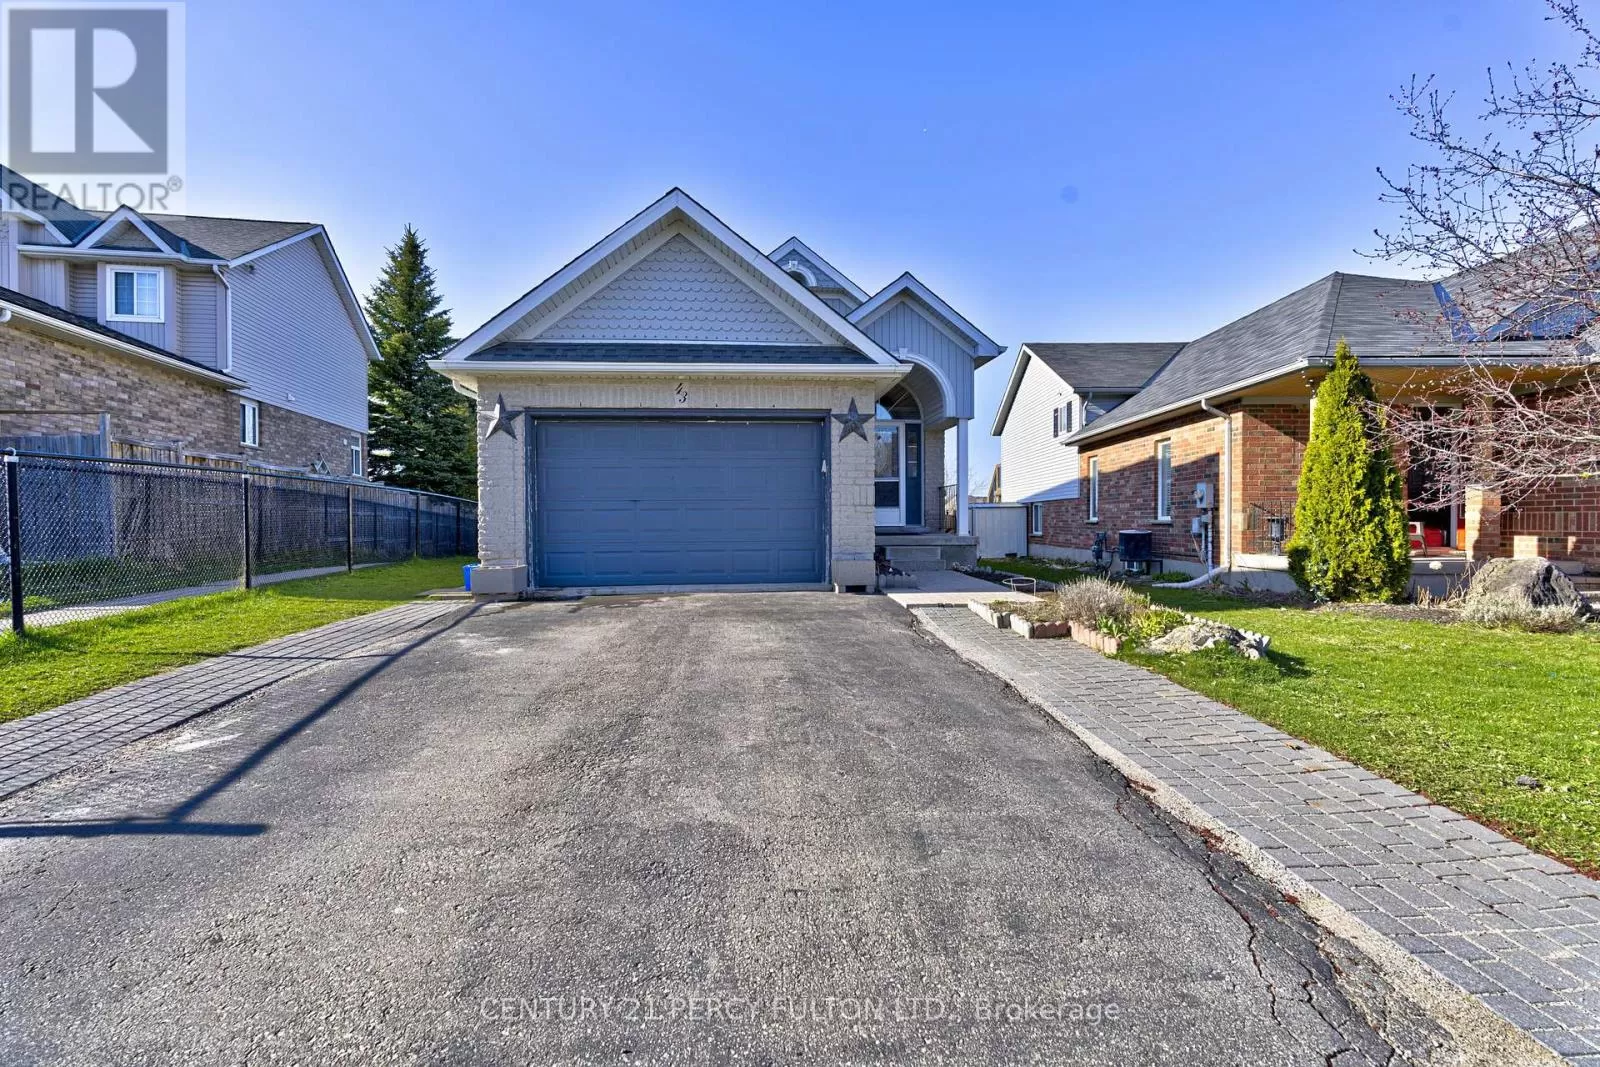 House for rent: 43 Hunter Rd, Orangeville, Ontario L9W 5C6